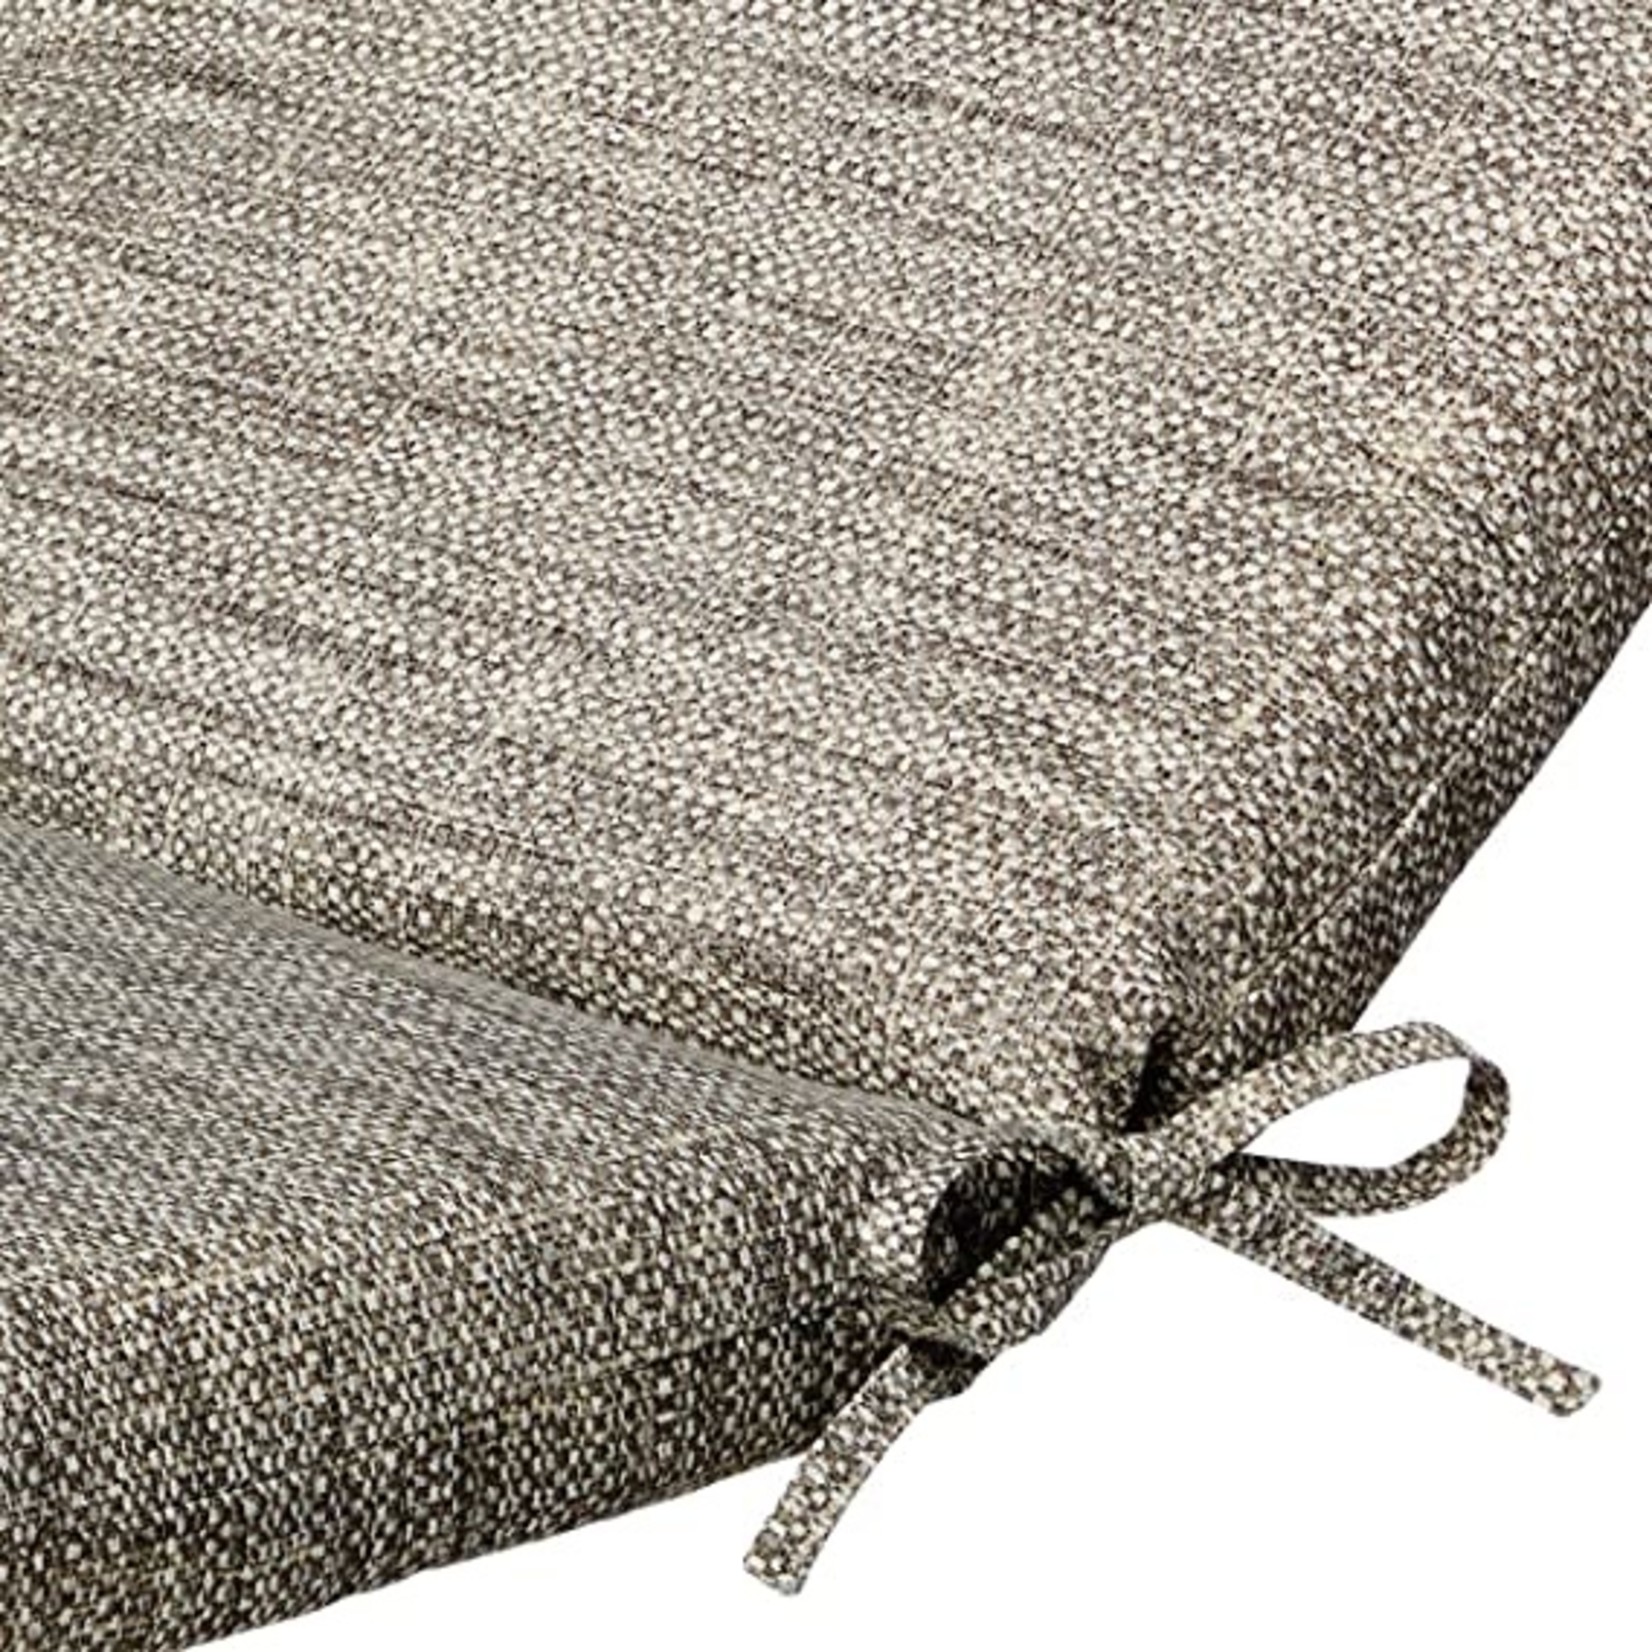 Pillow Perfect Chair Cushion- Seat & Back- Remi Patina Gray